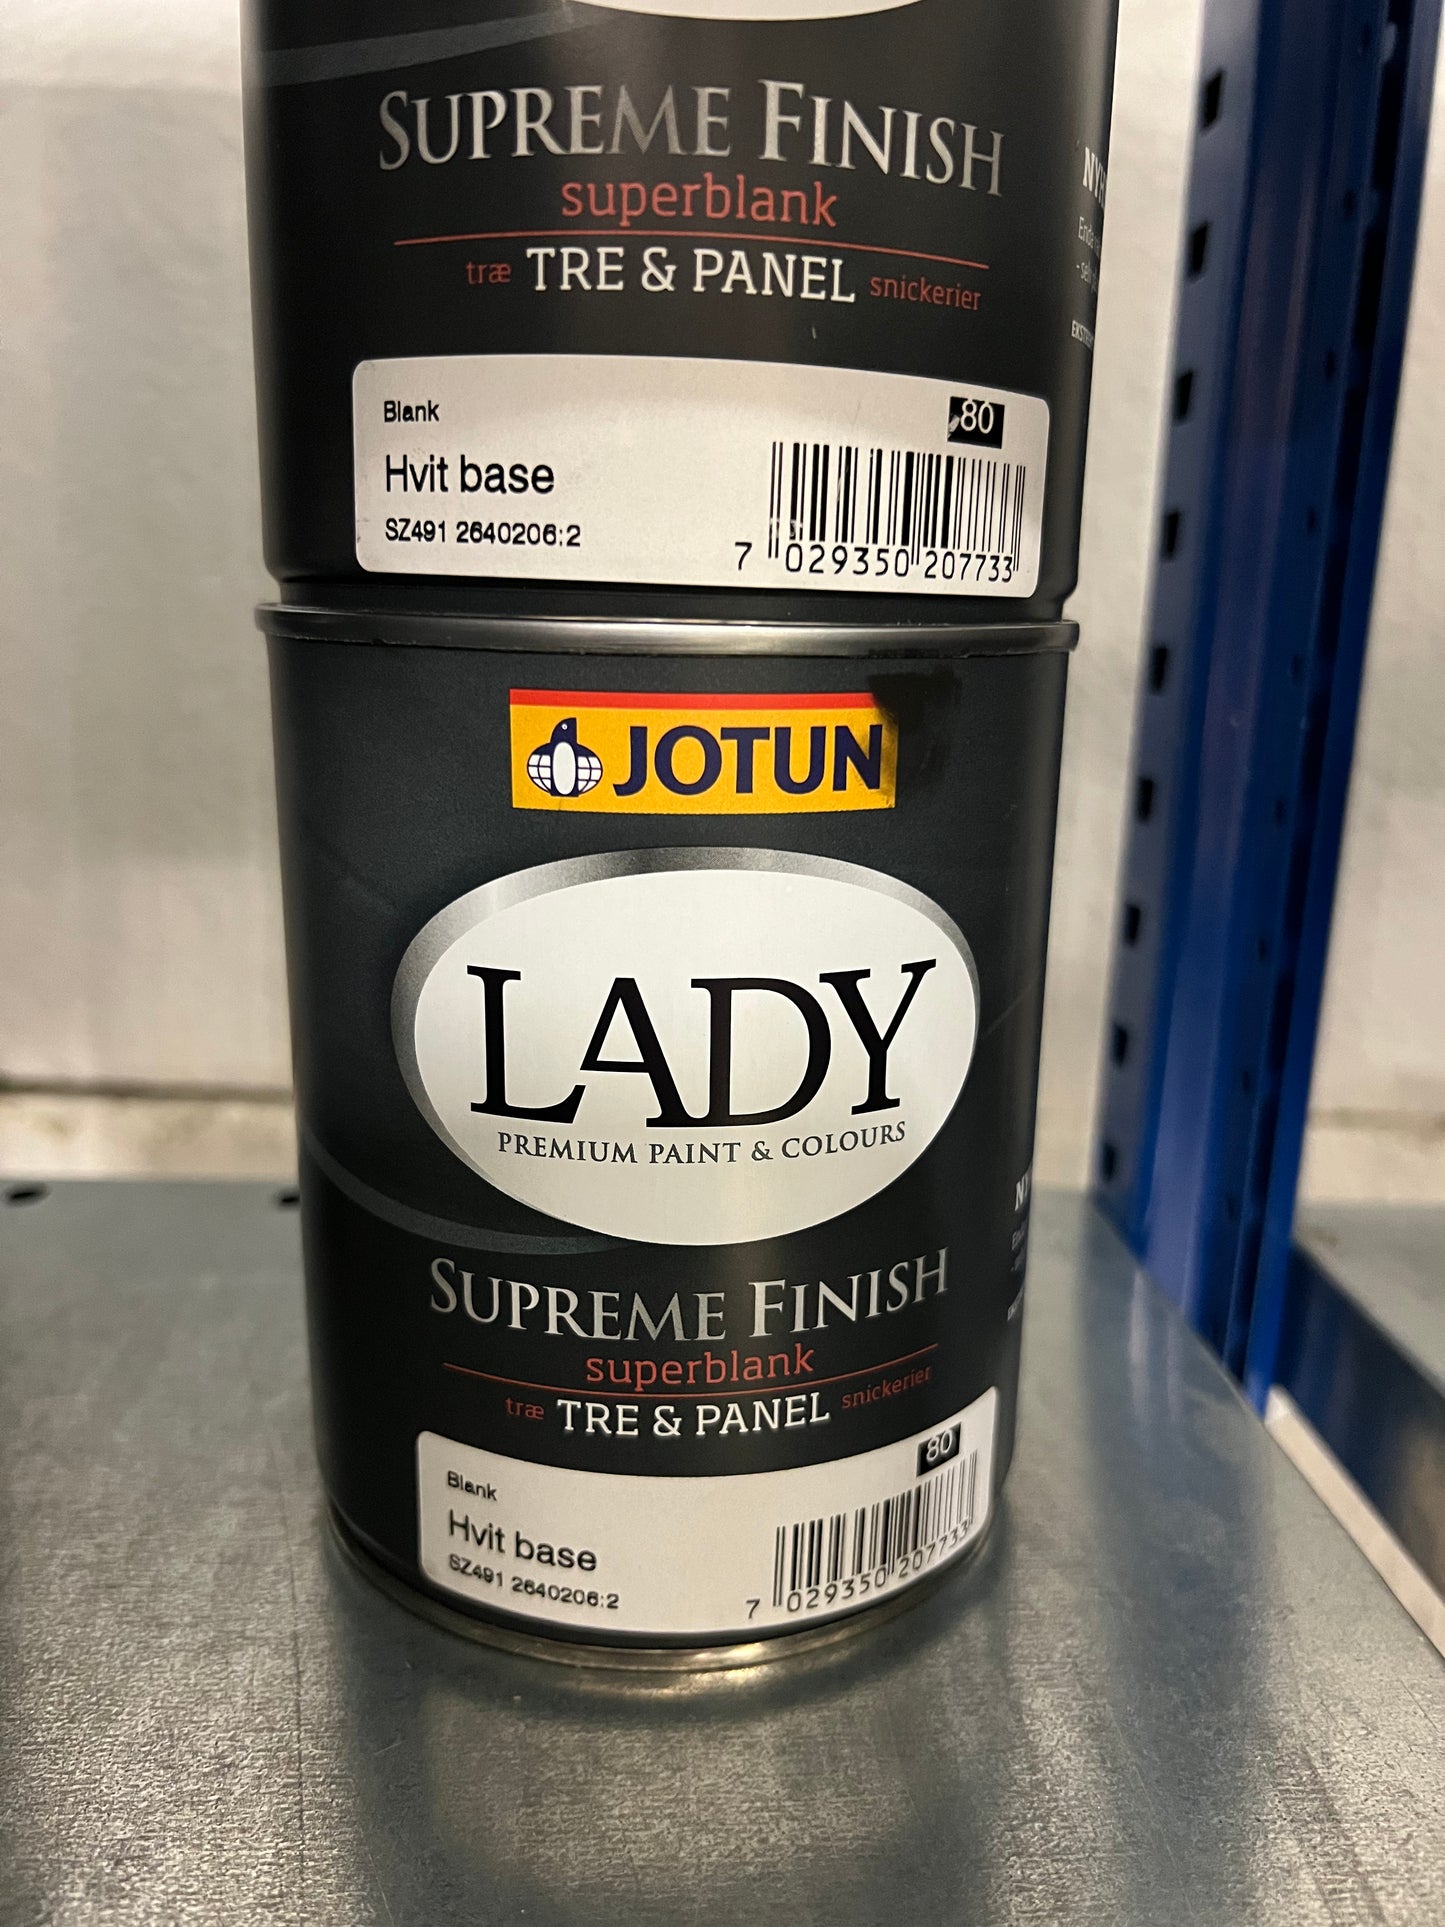 Jotun Lady Supreme Finish